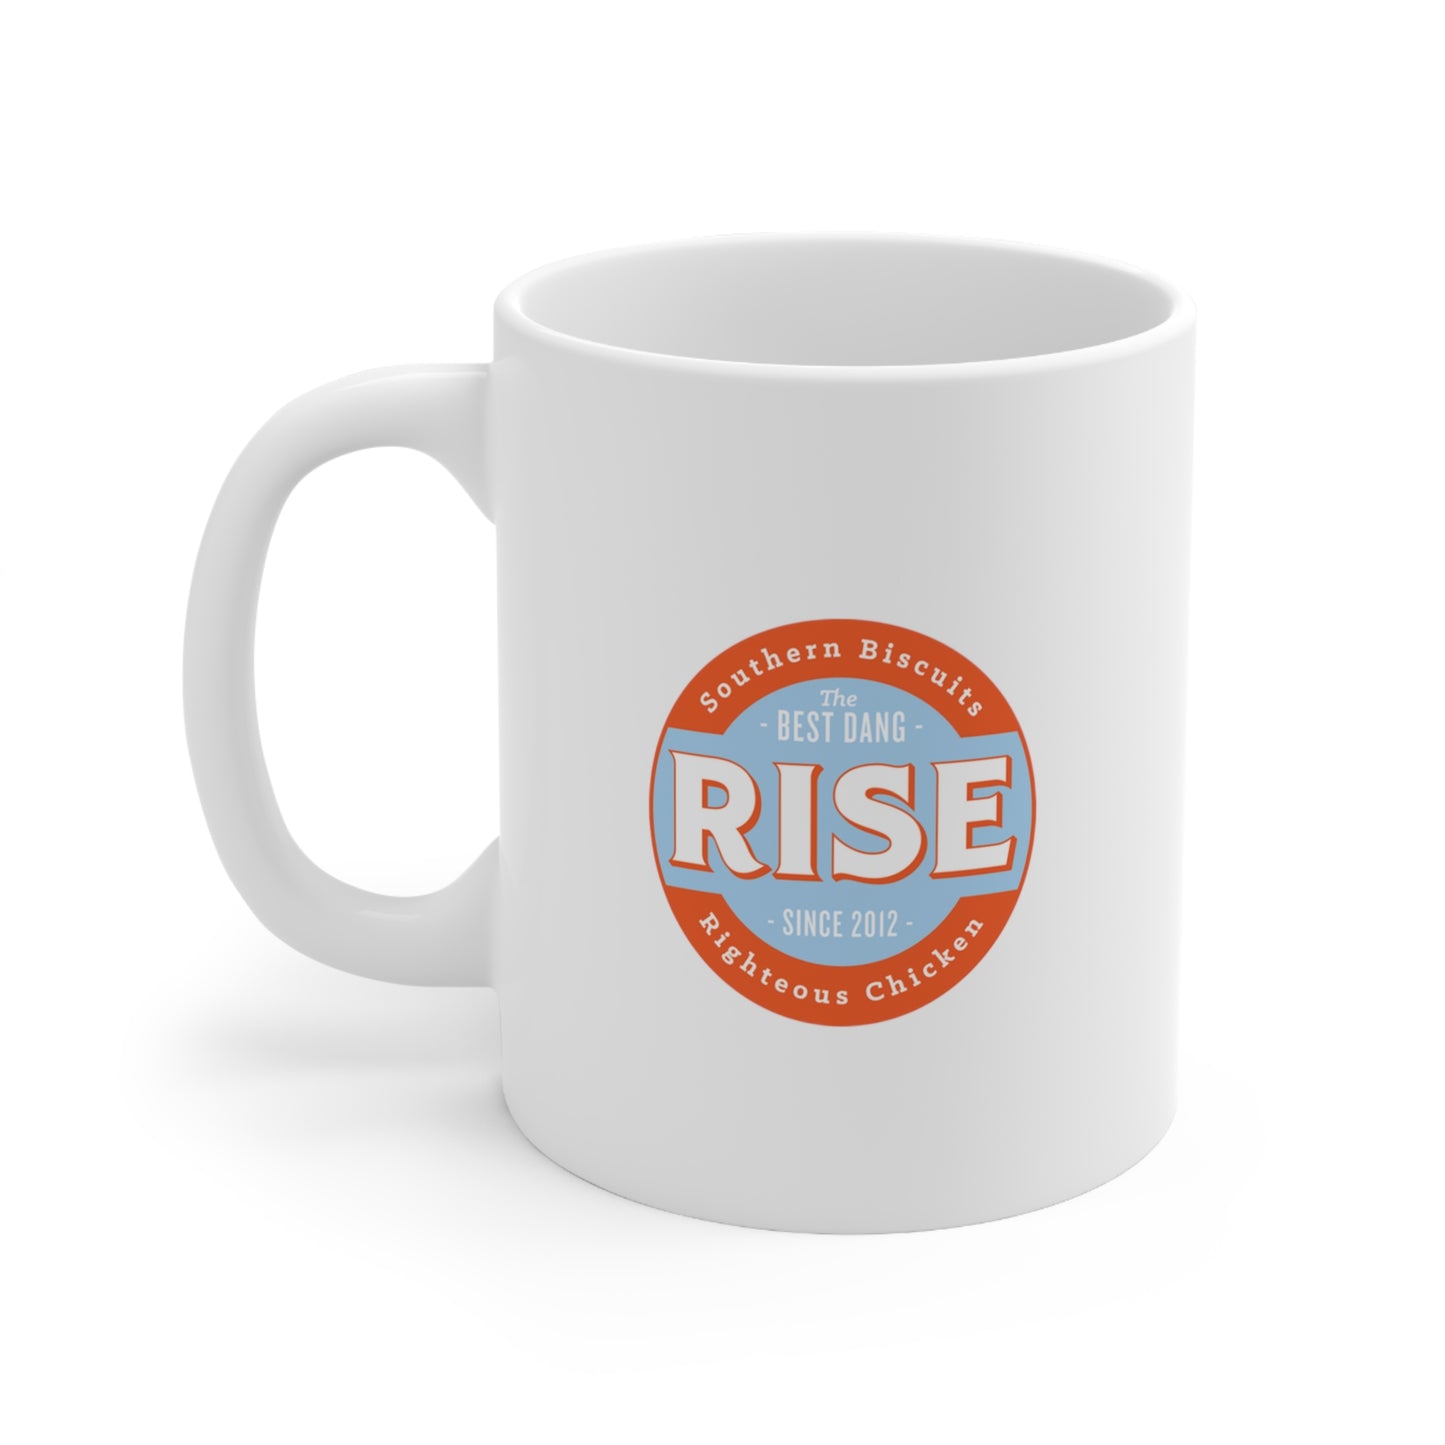 Nashville Hot Chicken Biscuit - Rise Ceramic Mug 11oz